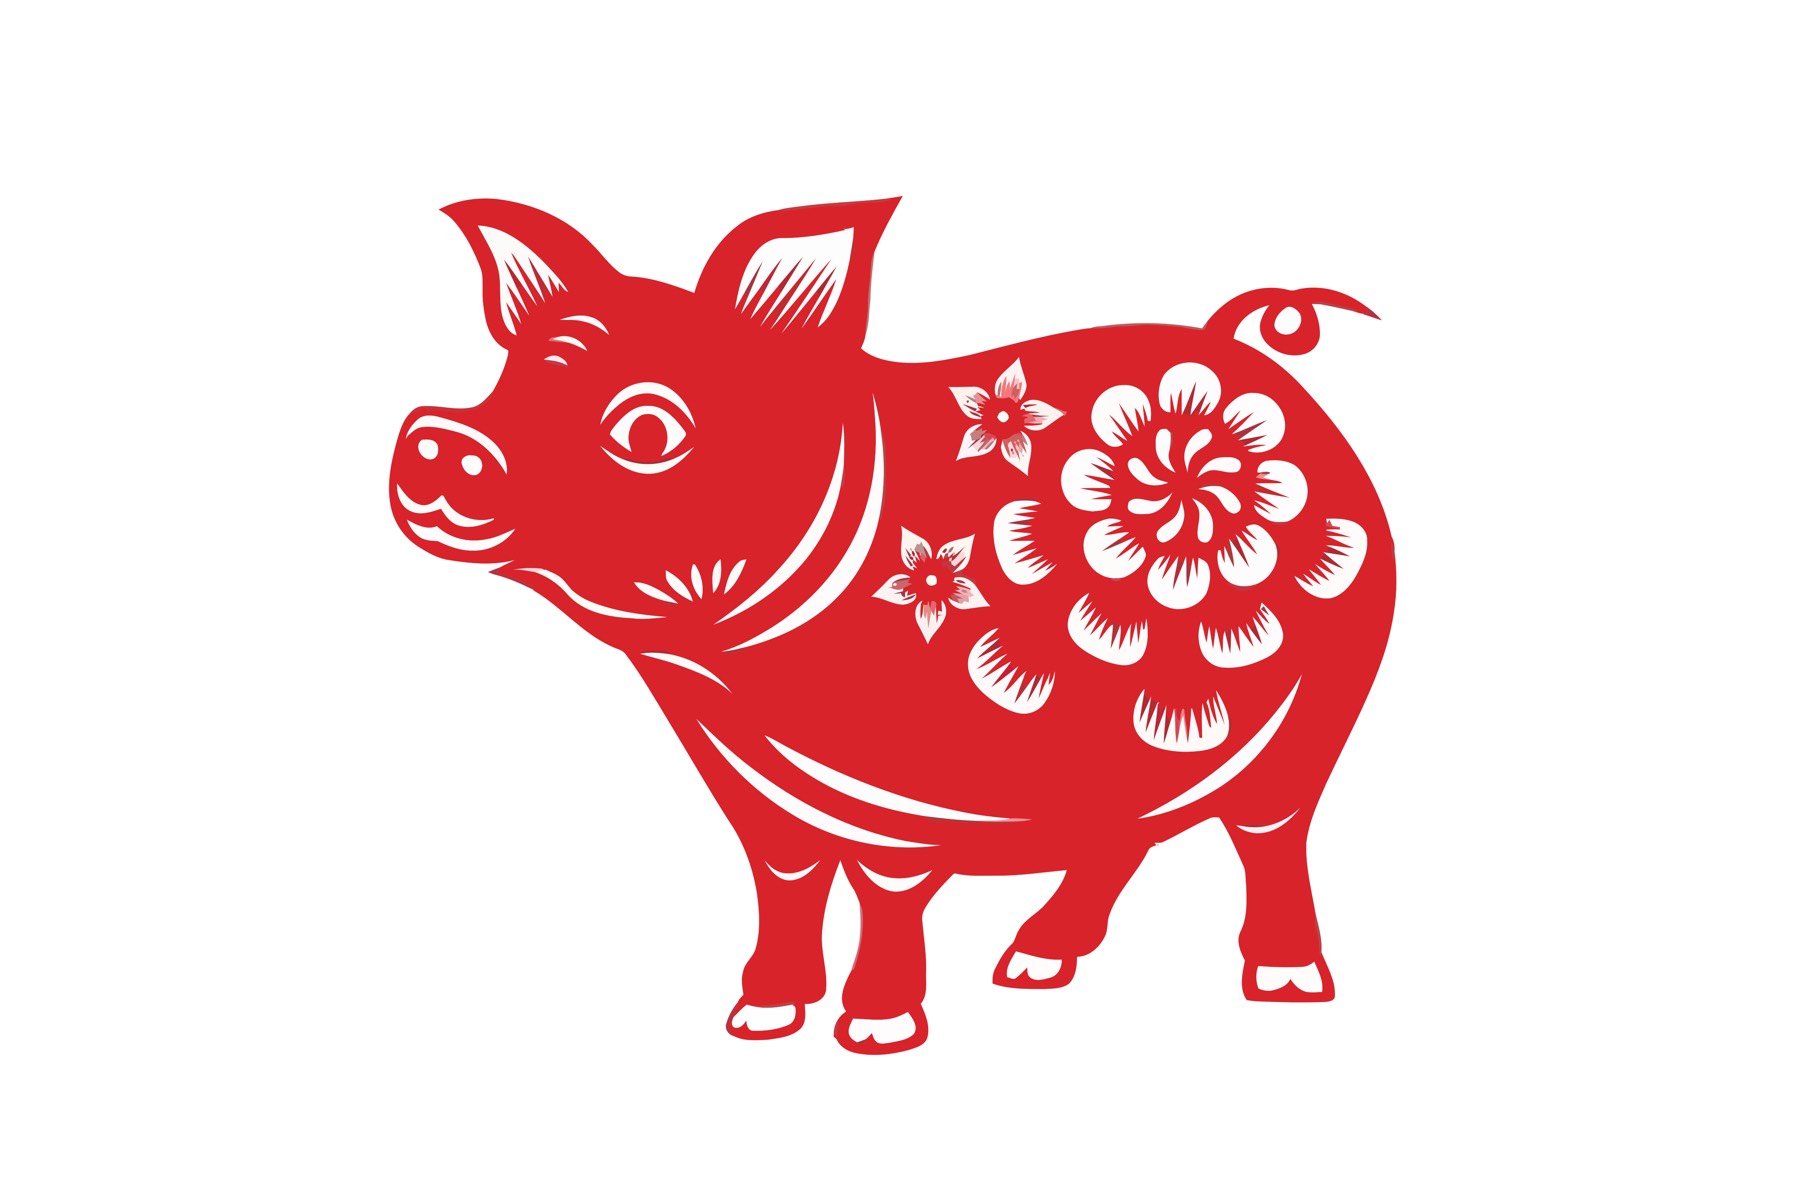 Chinese Year of the Pig - Chinese Stories Audiobooks - Free Audio Books | Knigi-Audio.com/en/